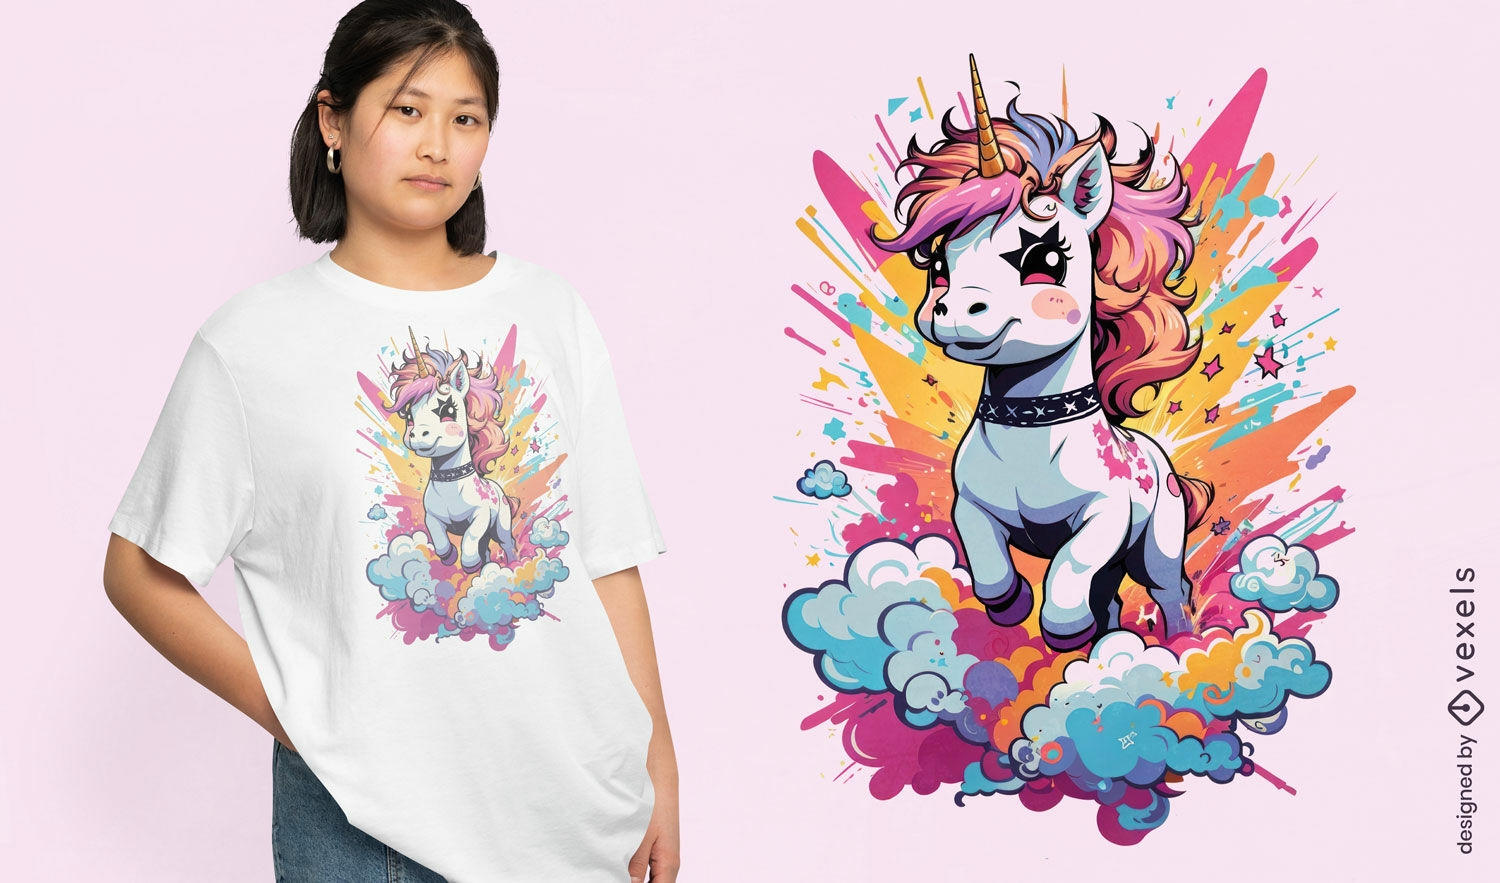 Dise?o de camiseta colorida de unicornio punk.